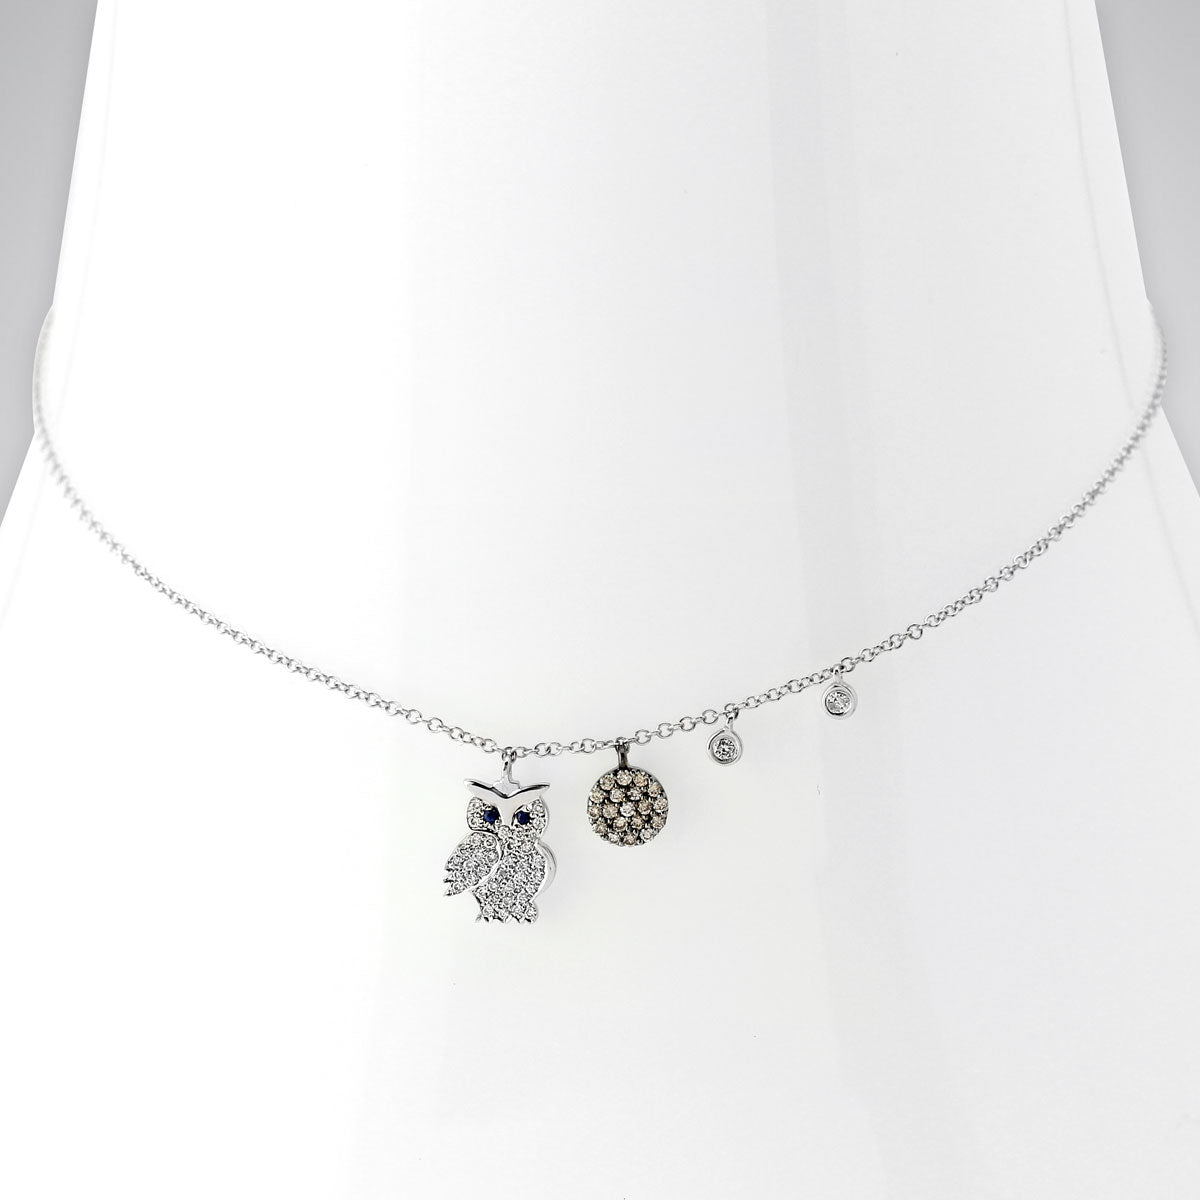 Diamond Owl Necklace-341852